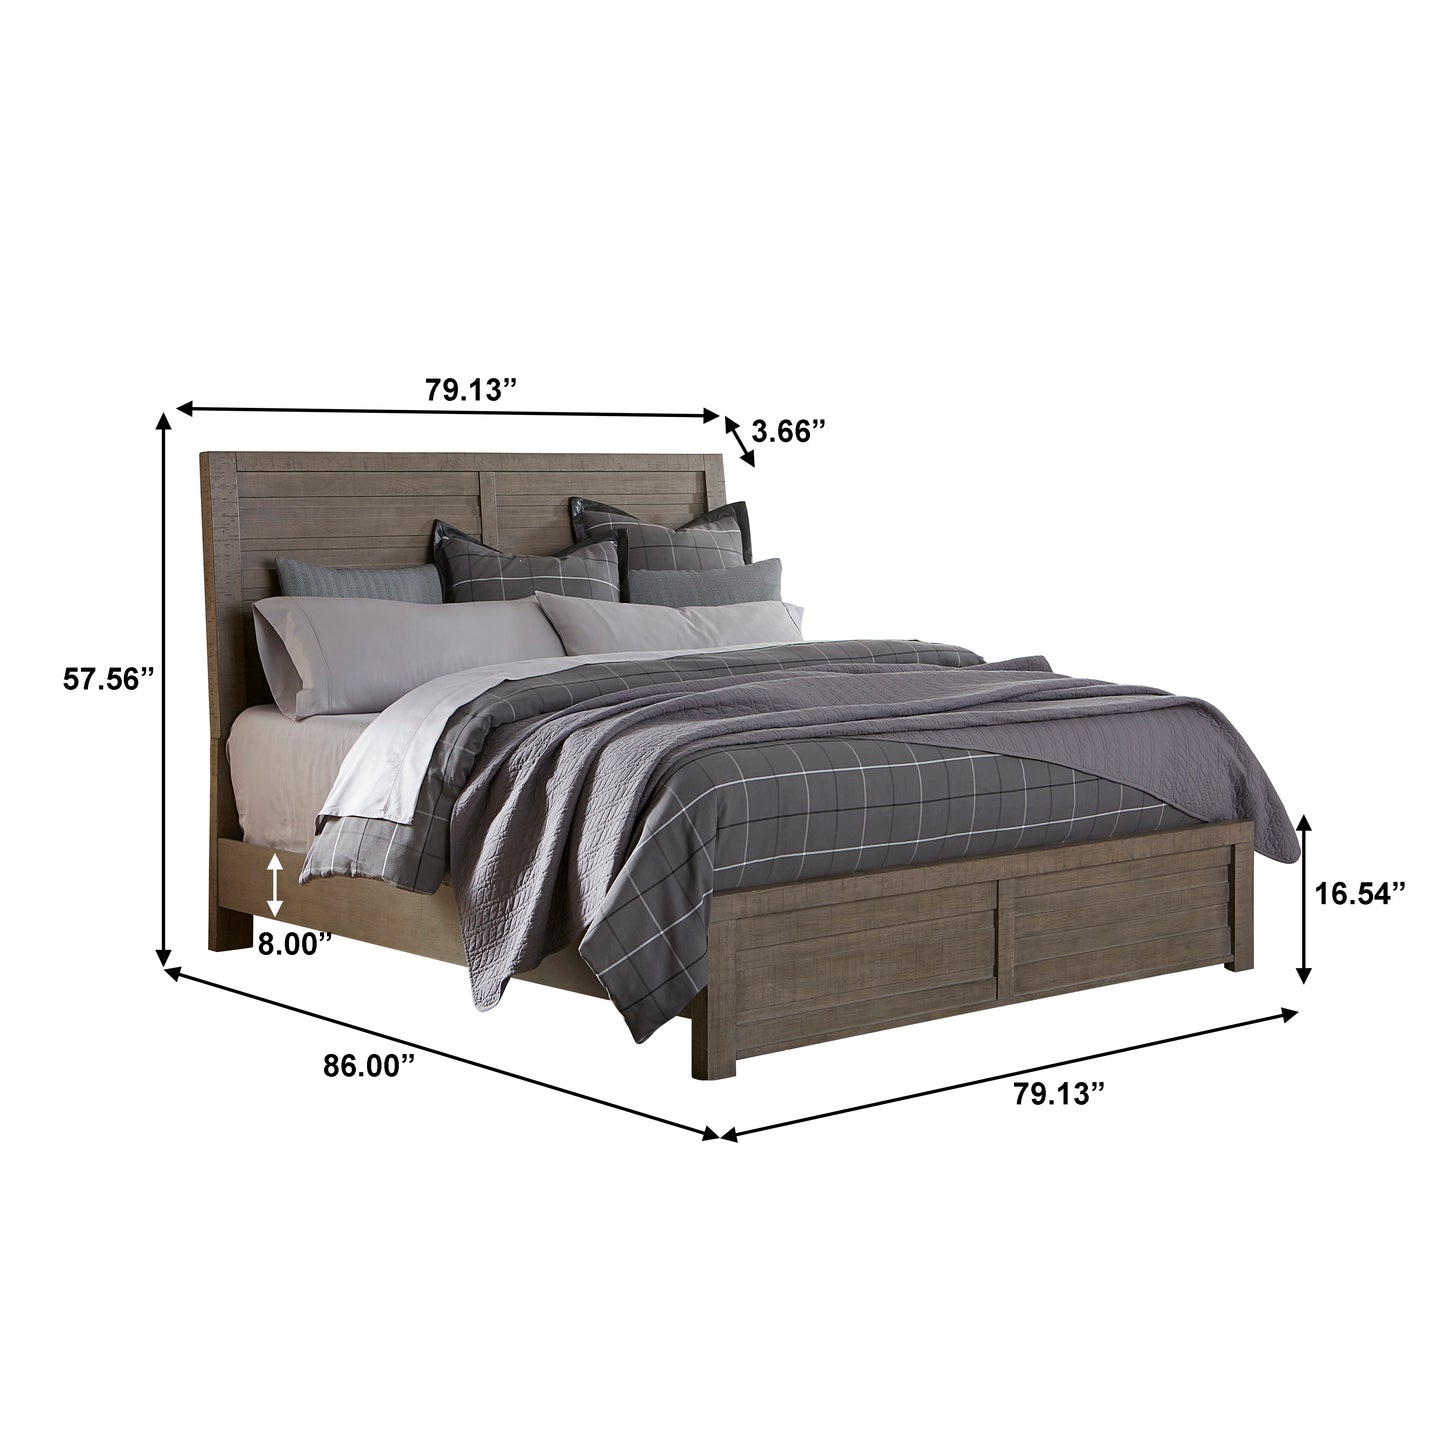 Sedona Transitional Medium Gray Wood Panel Bed